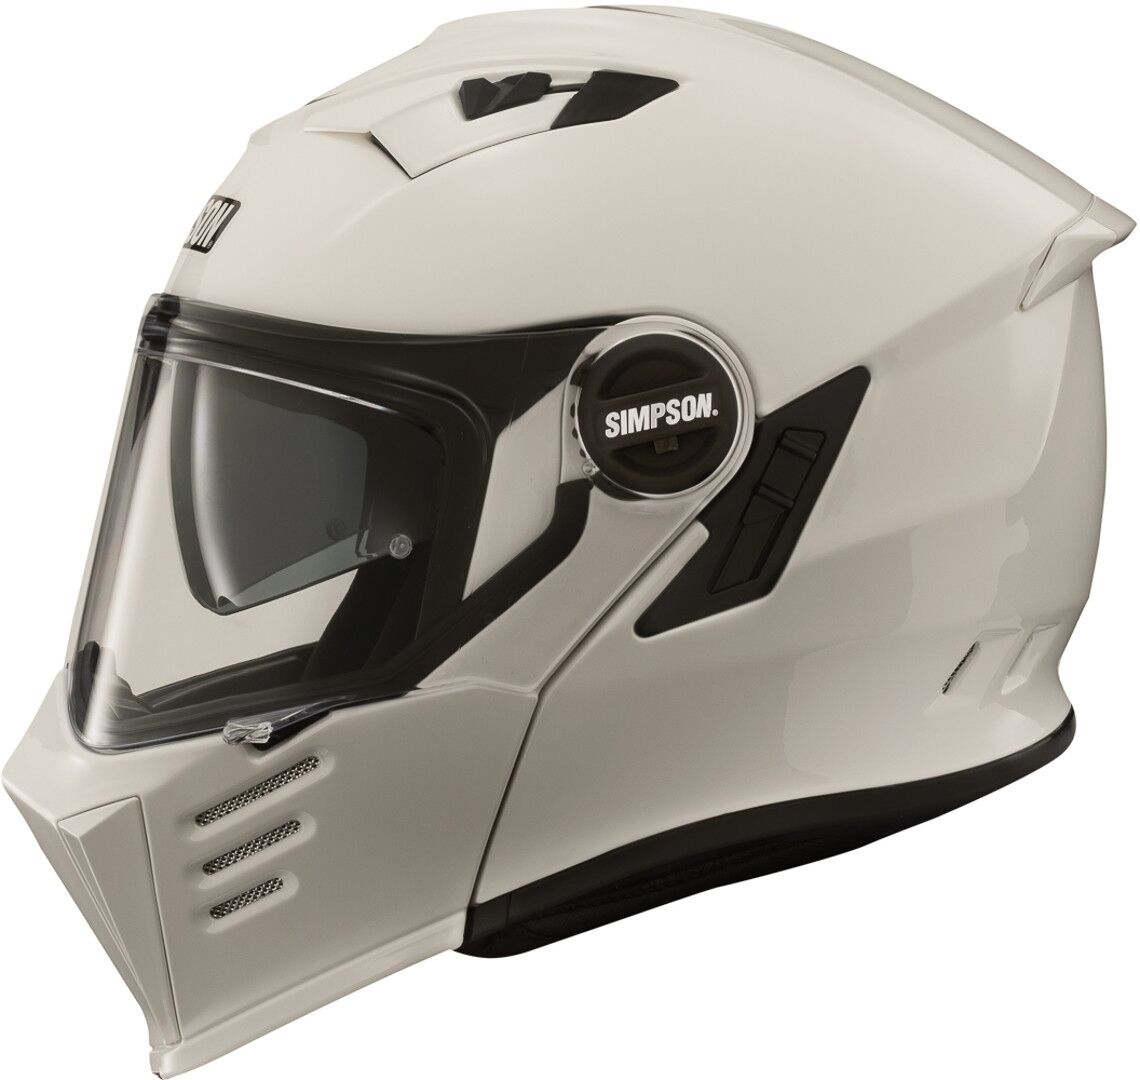 Simpson Darksome Solid Motorcycle Helmet  - White